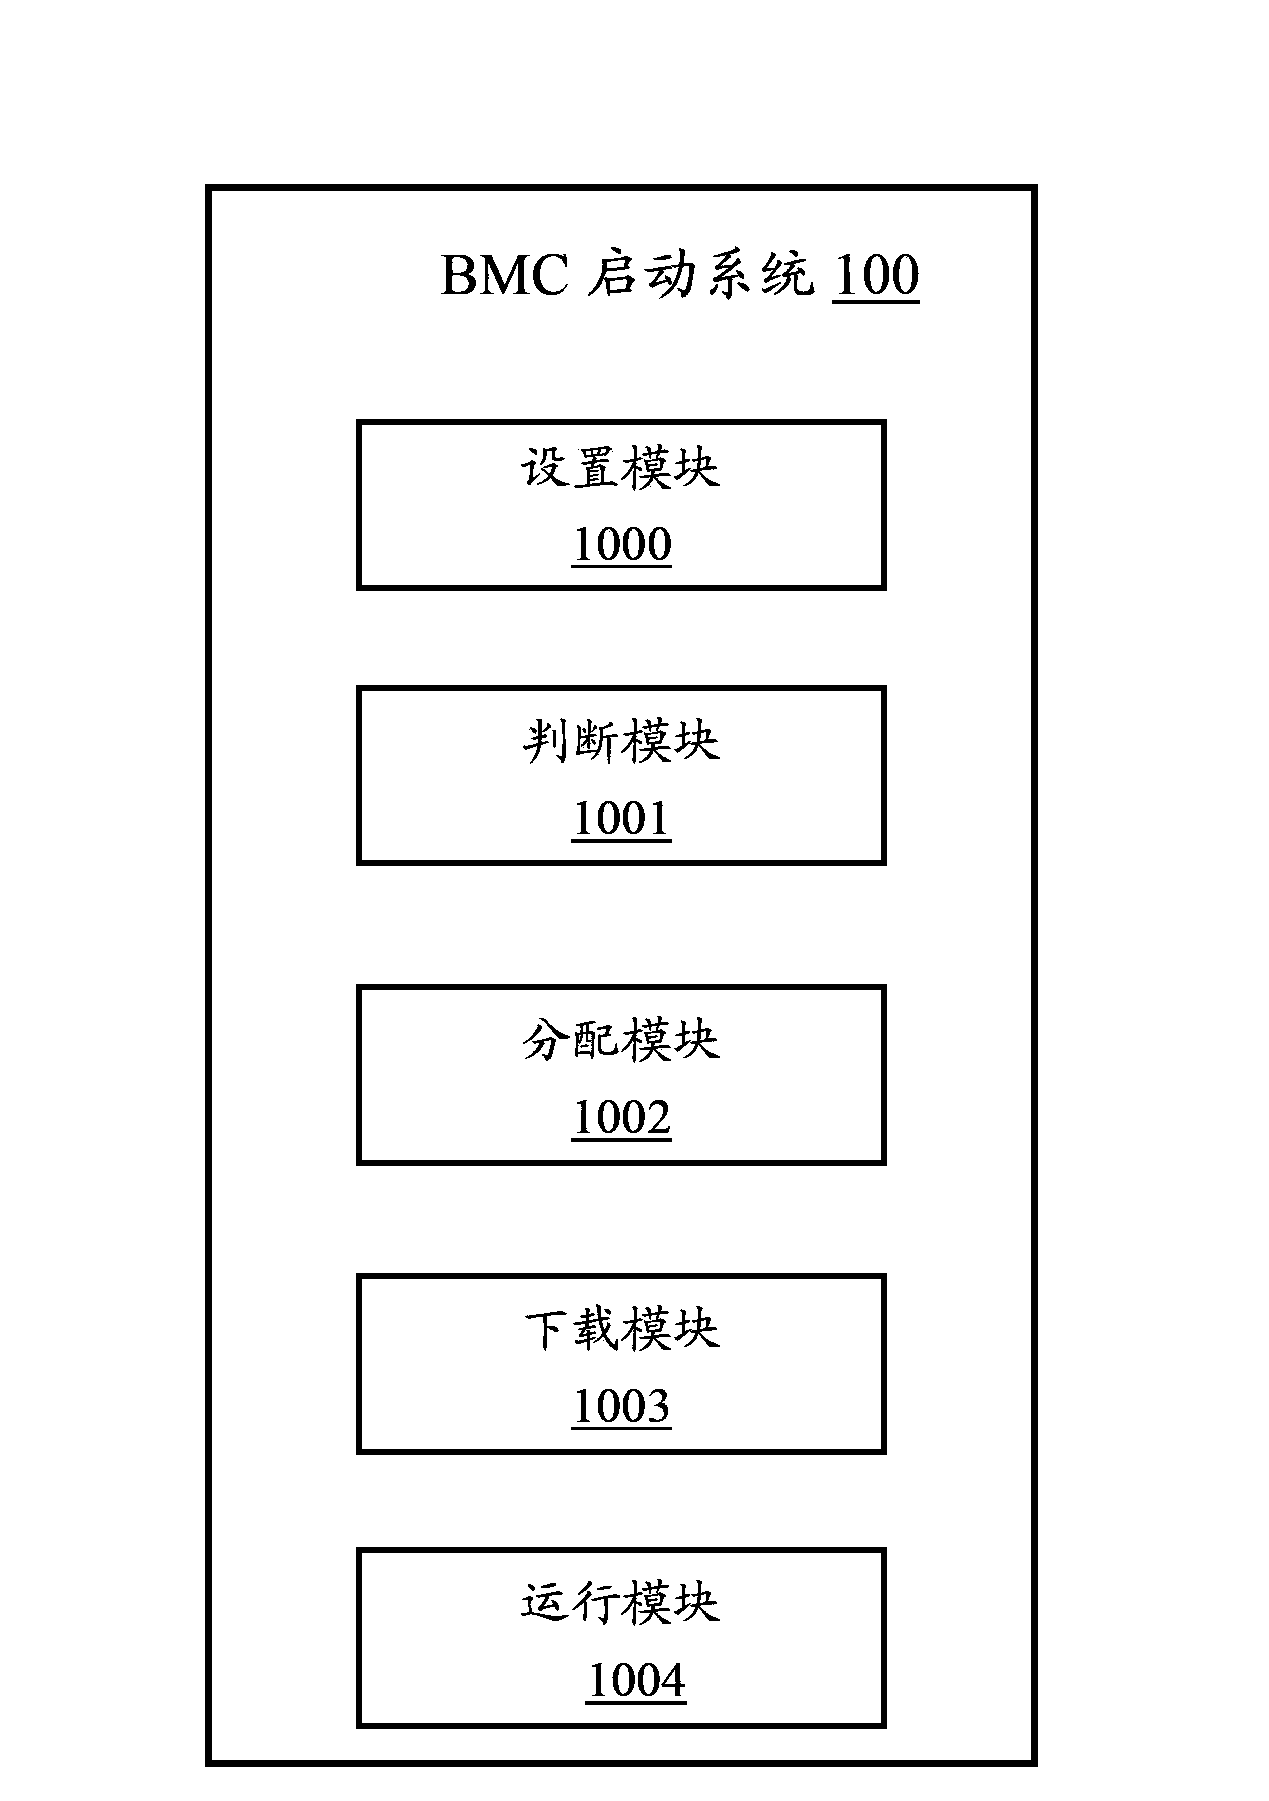 BMC starting system and method